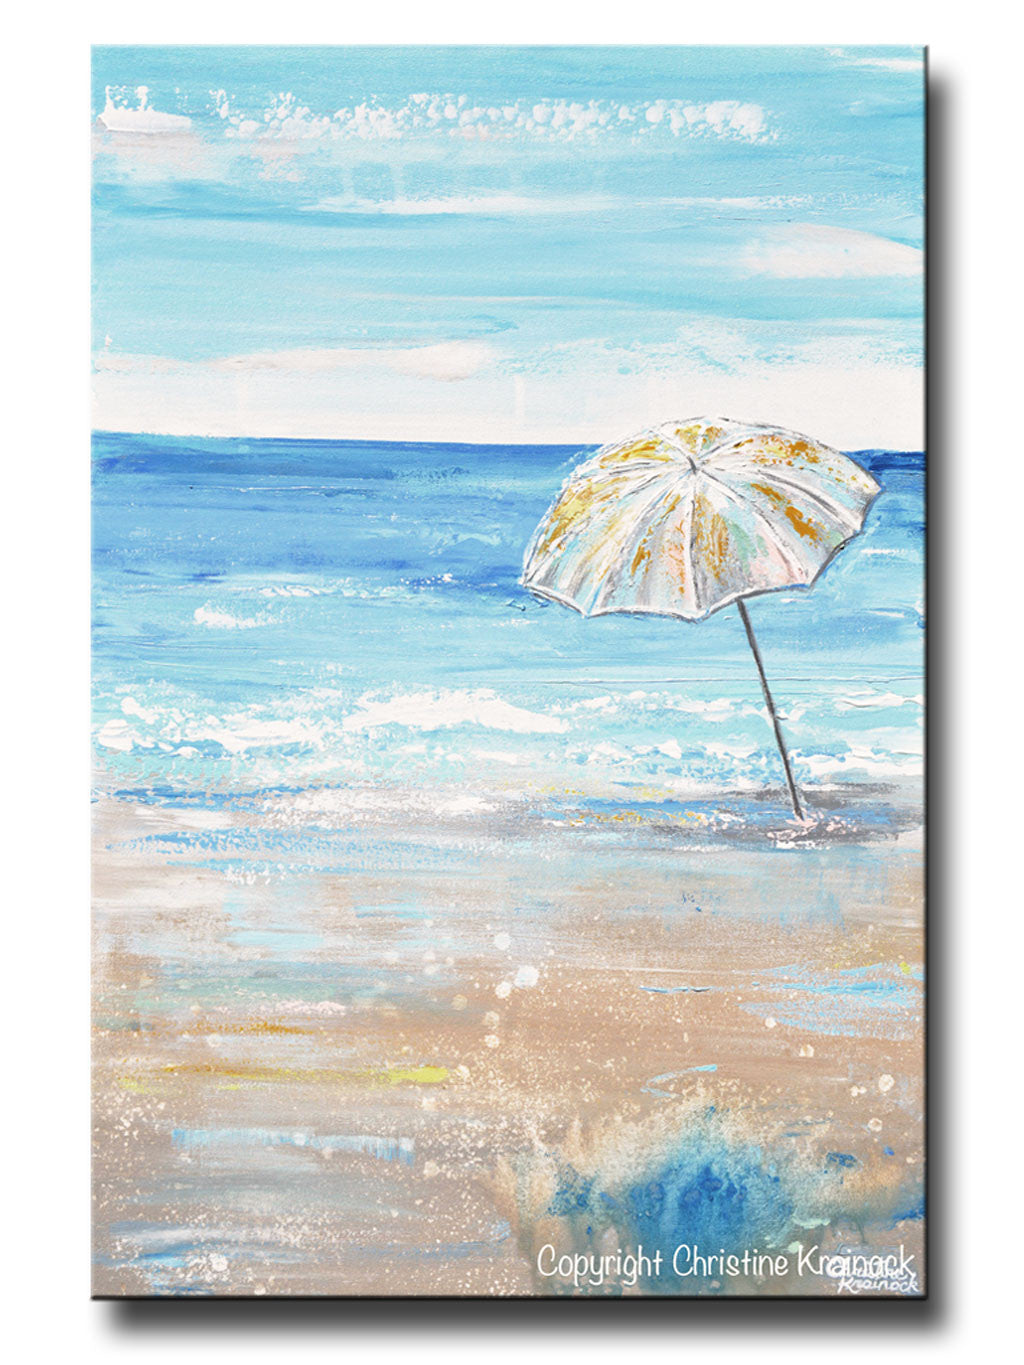 ORIGINAL Art Abstract Painting Beach Umbrella Ocean Blue White Beige Sand Coastal Wall Art Decor 24x36"